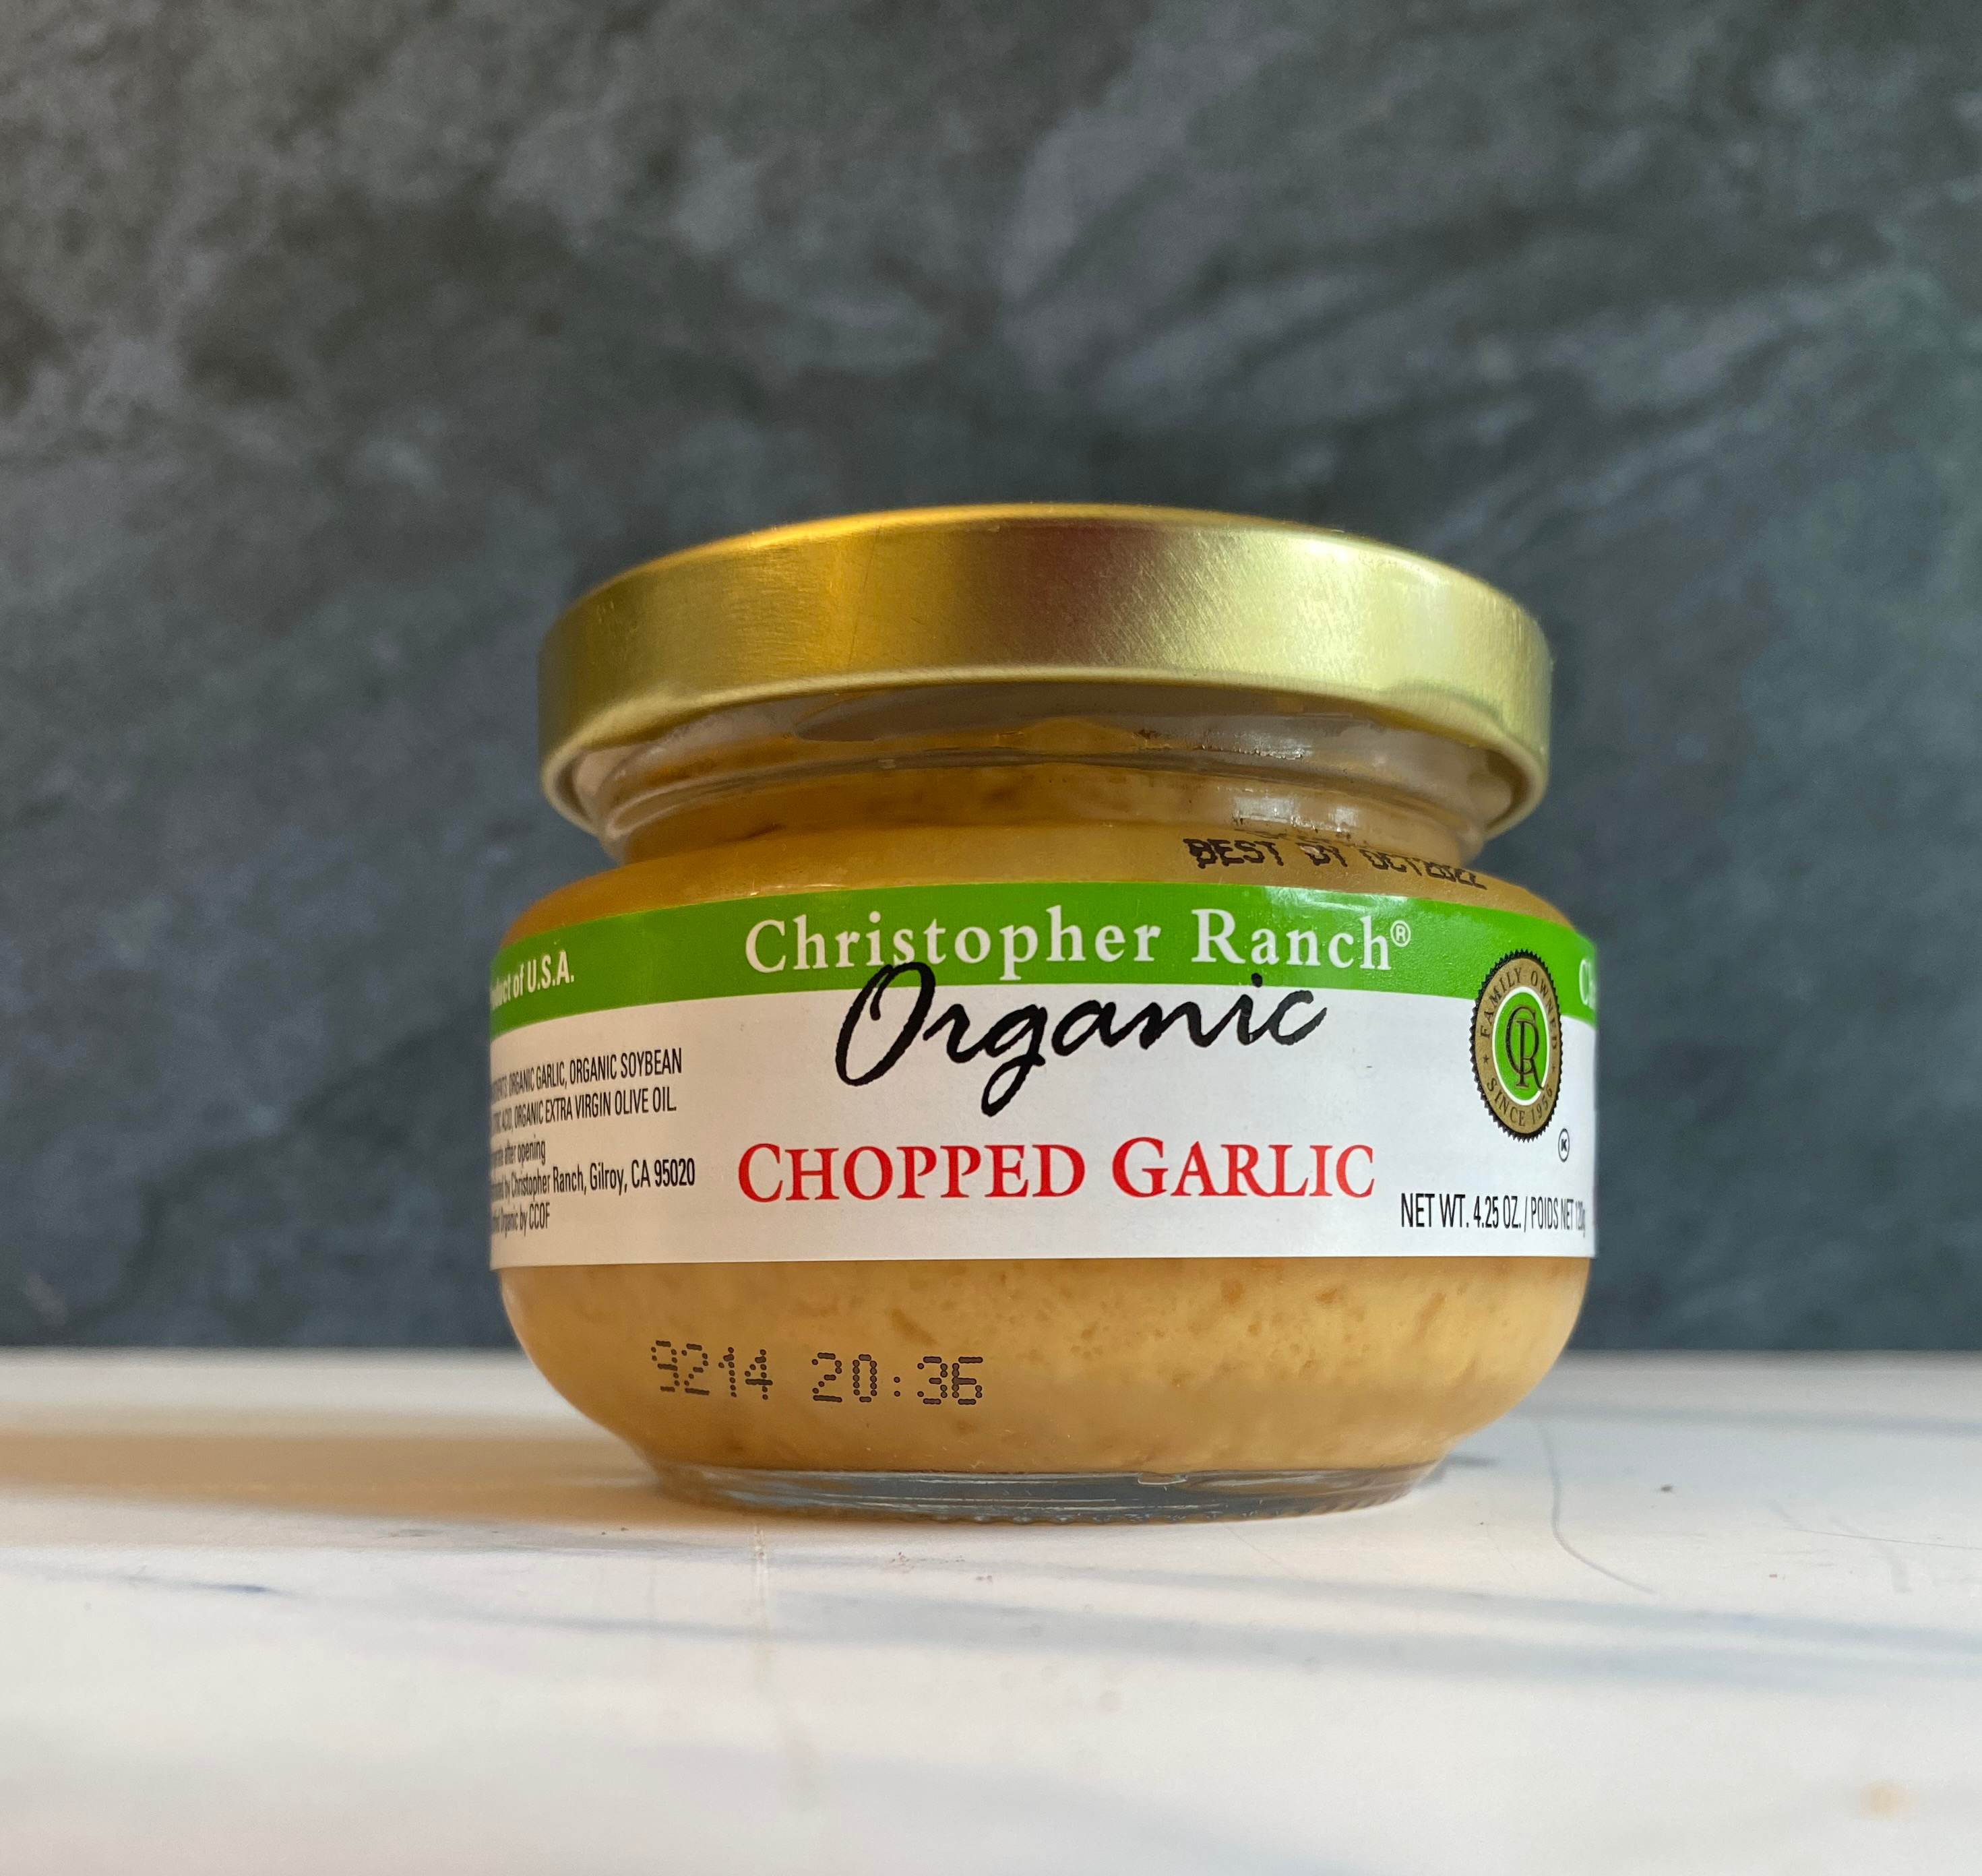 organic chopped garlic from Christopher ranch